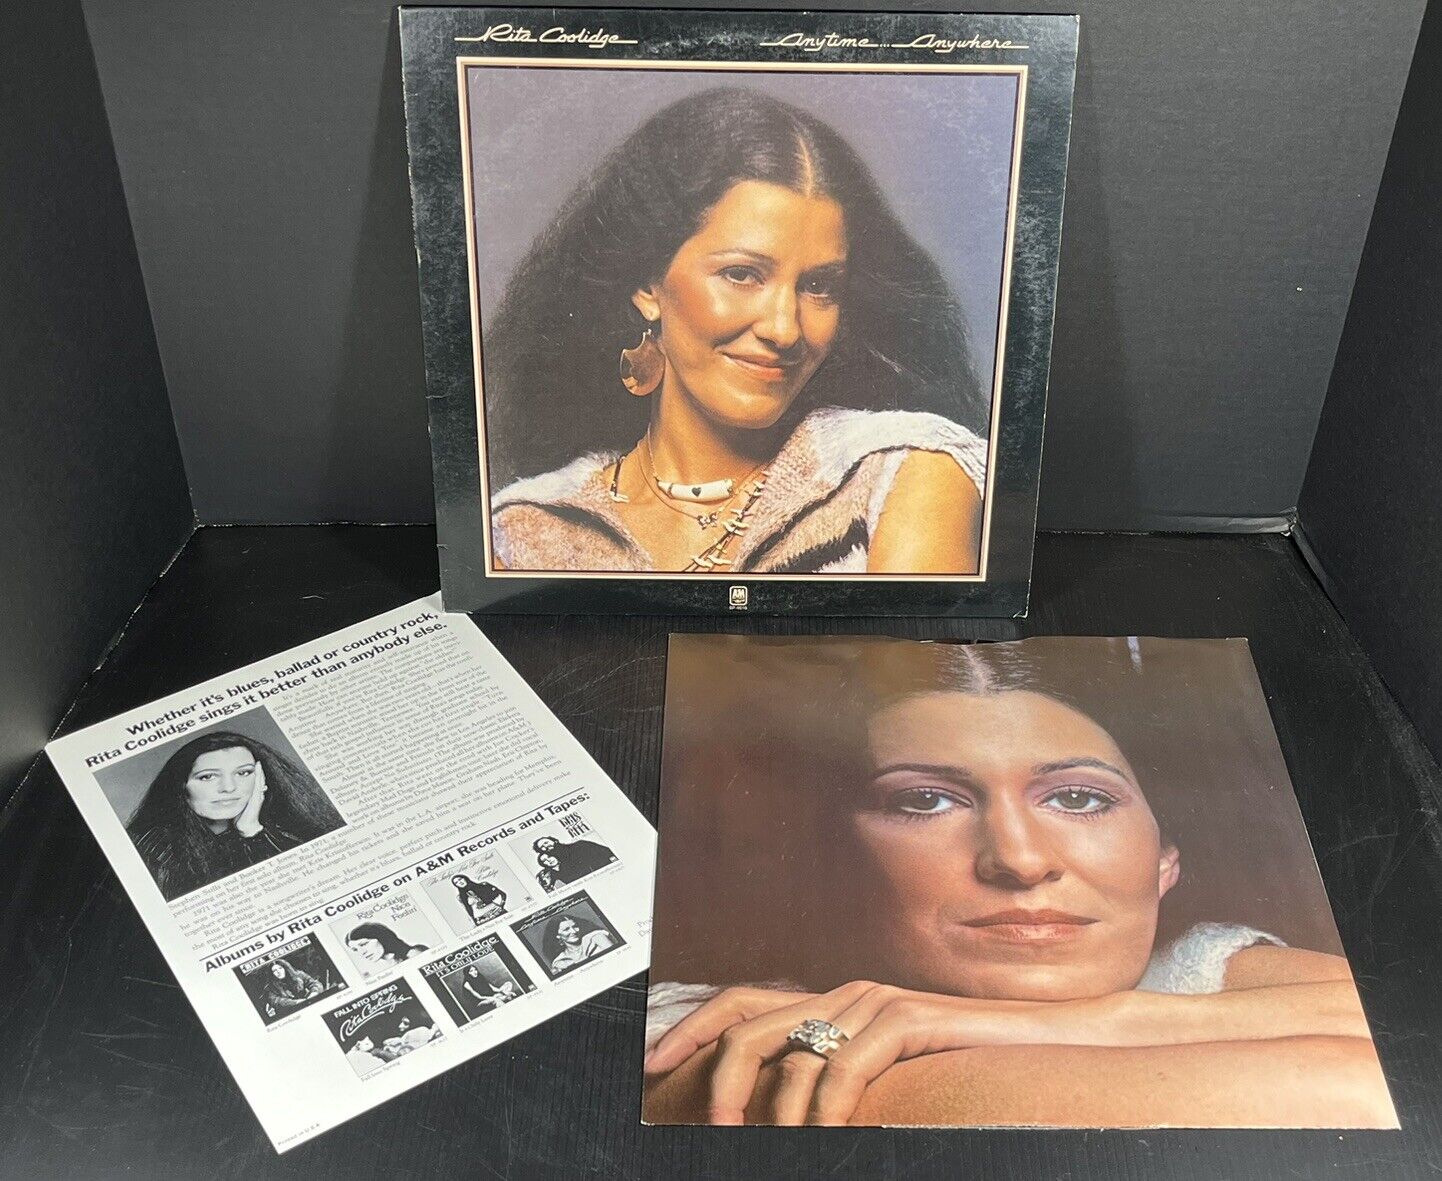 Vintage - 1977 Rita Coolidge - Anytime...Anywhere - Vinyl LP Album - A&M SP-4616